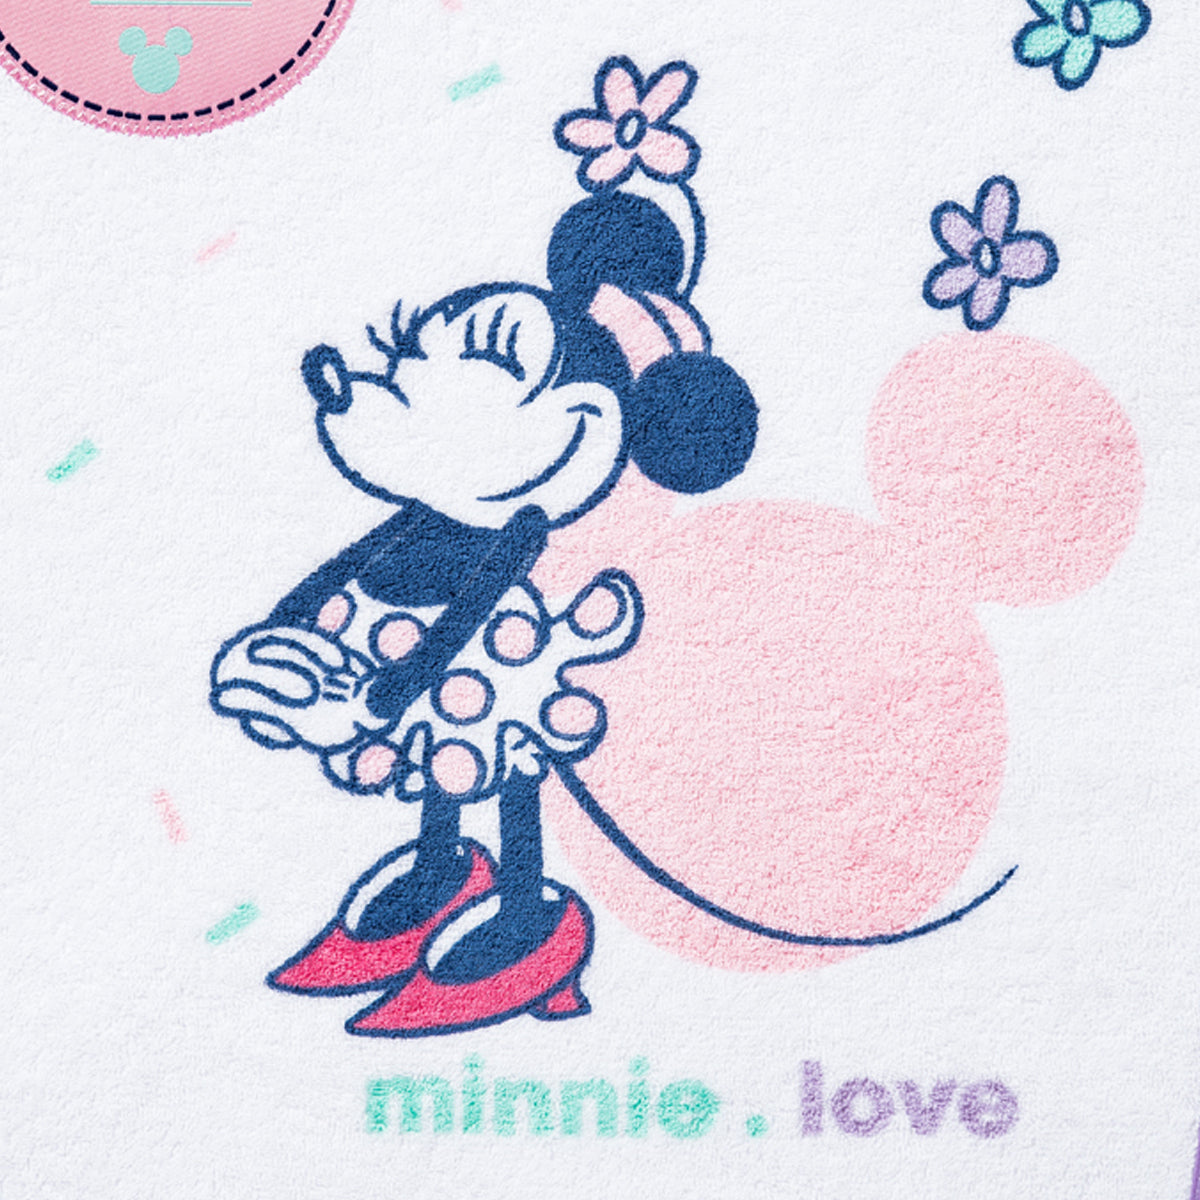 Bavoir maternelle Minnie Confettis 24 mois Disney Baby - BB Malin